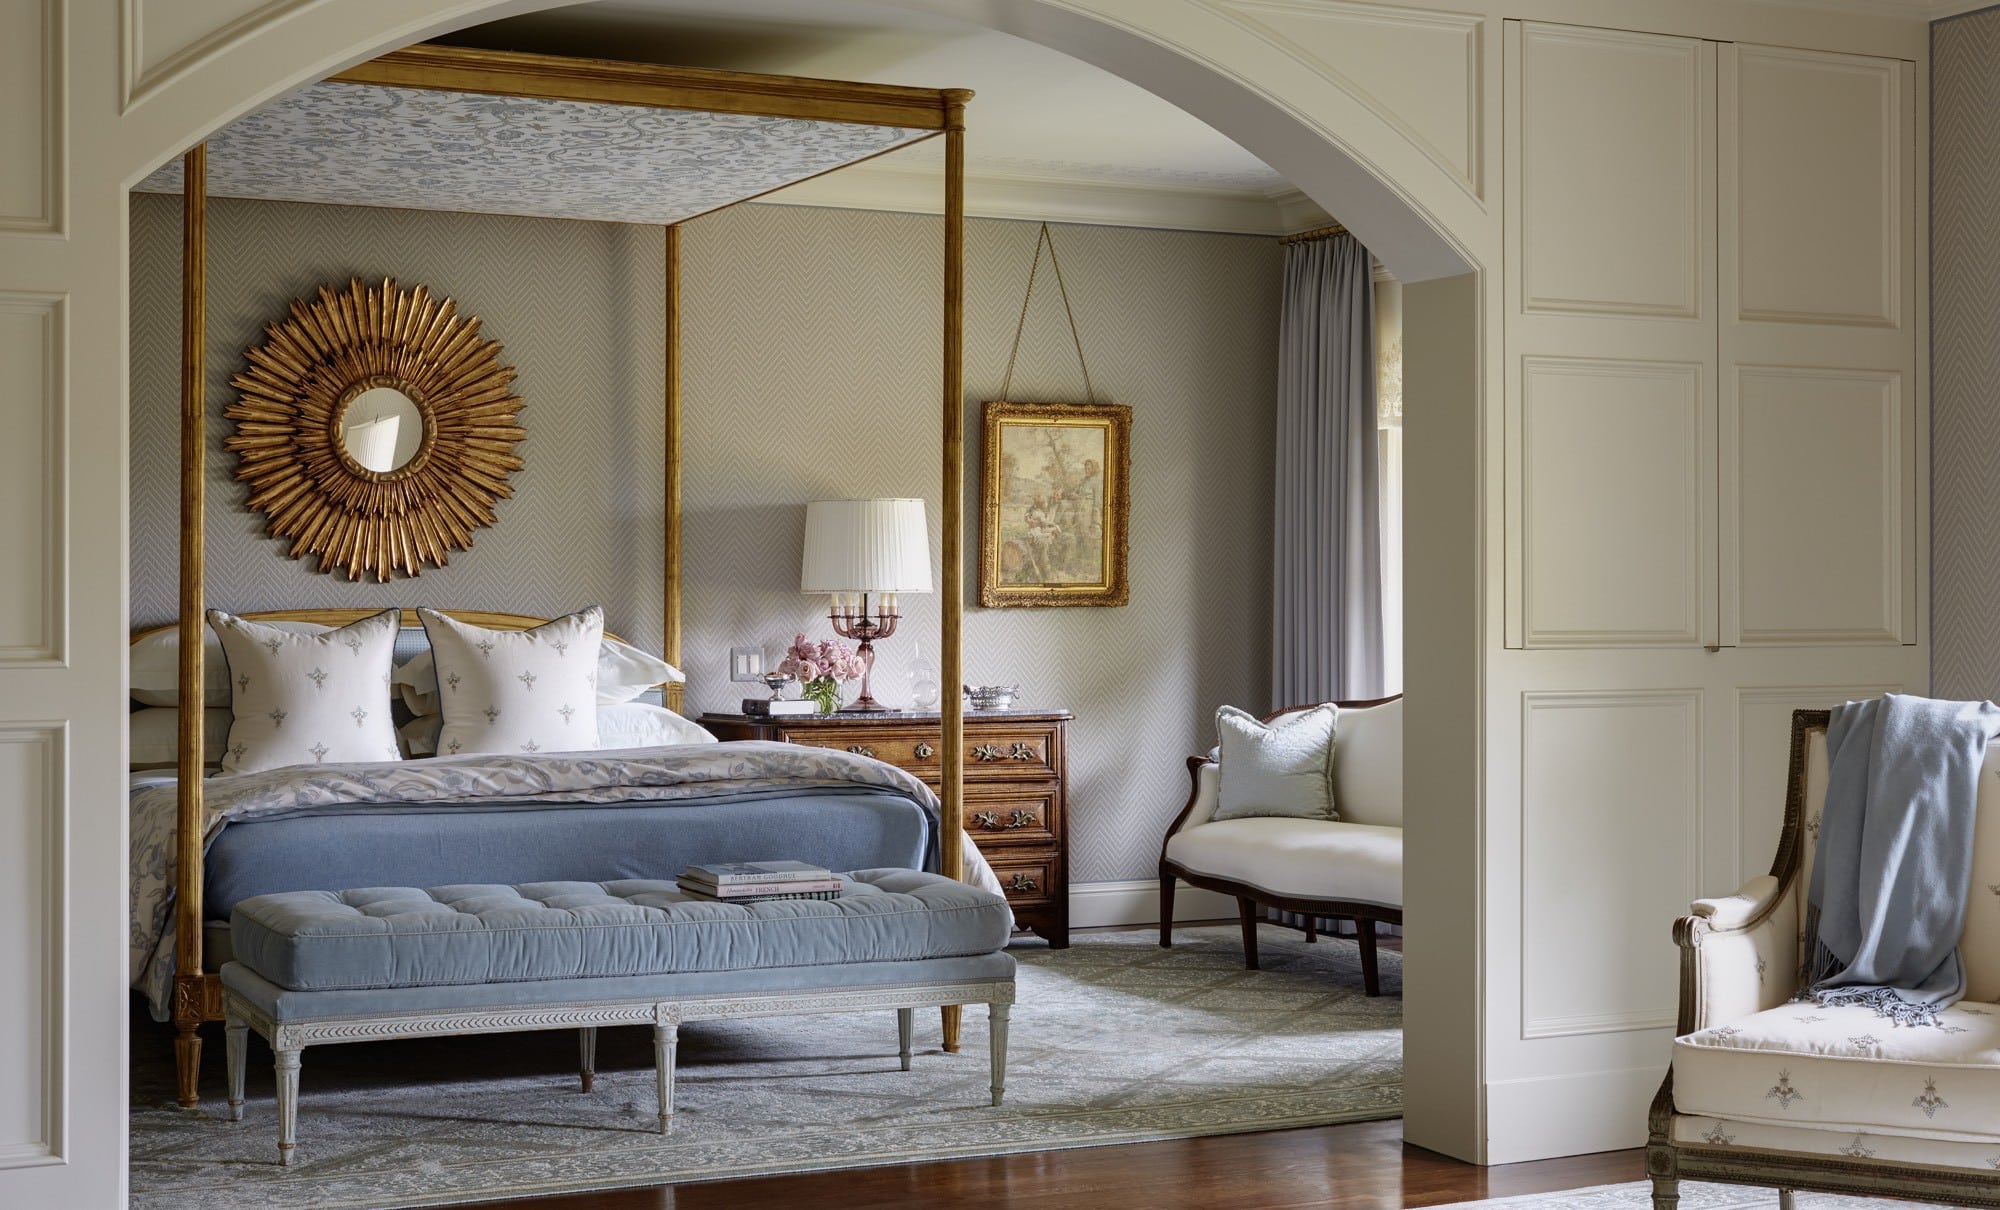 Marshall Watson Design | Luke White photography, canopy bed, bedroom, bedroom design , bedroom decor, round mirror, sunburst mirror, antique mirror